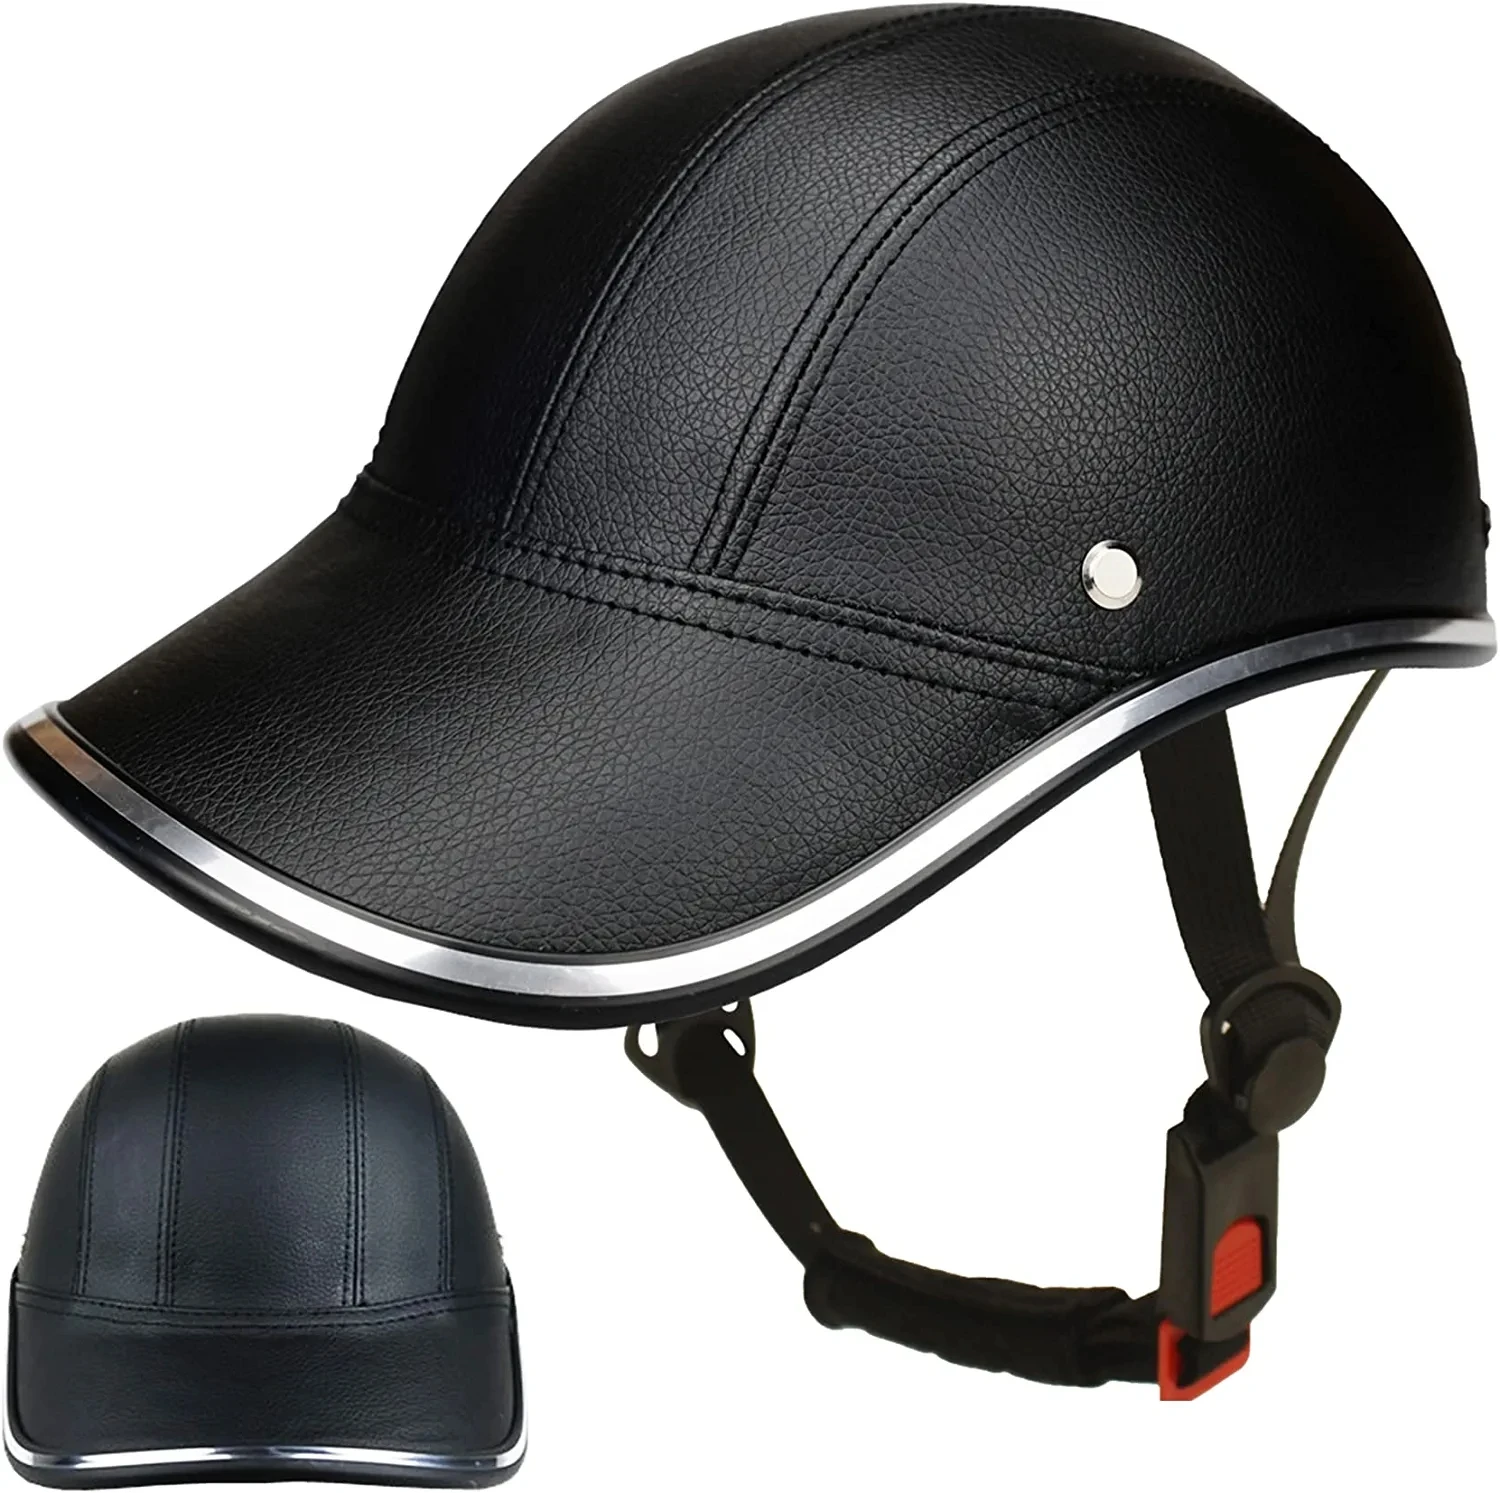 Bicycle-Baseball-Cap-Helmets-Motocross-Electric-bike-ABS-Leather ...